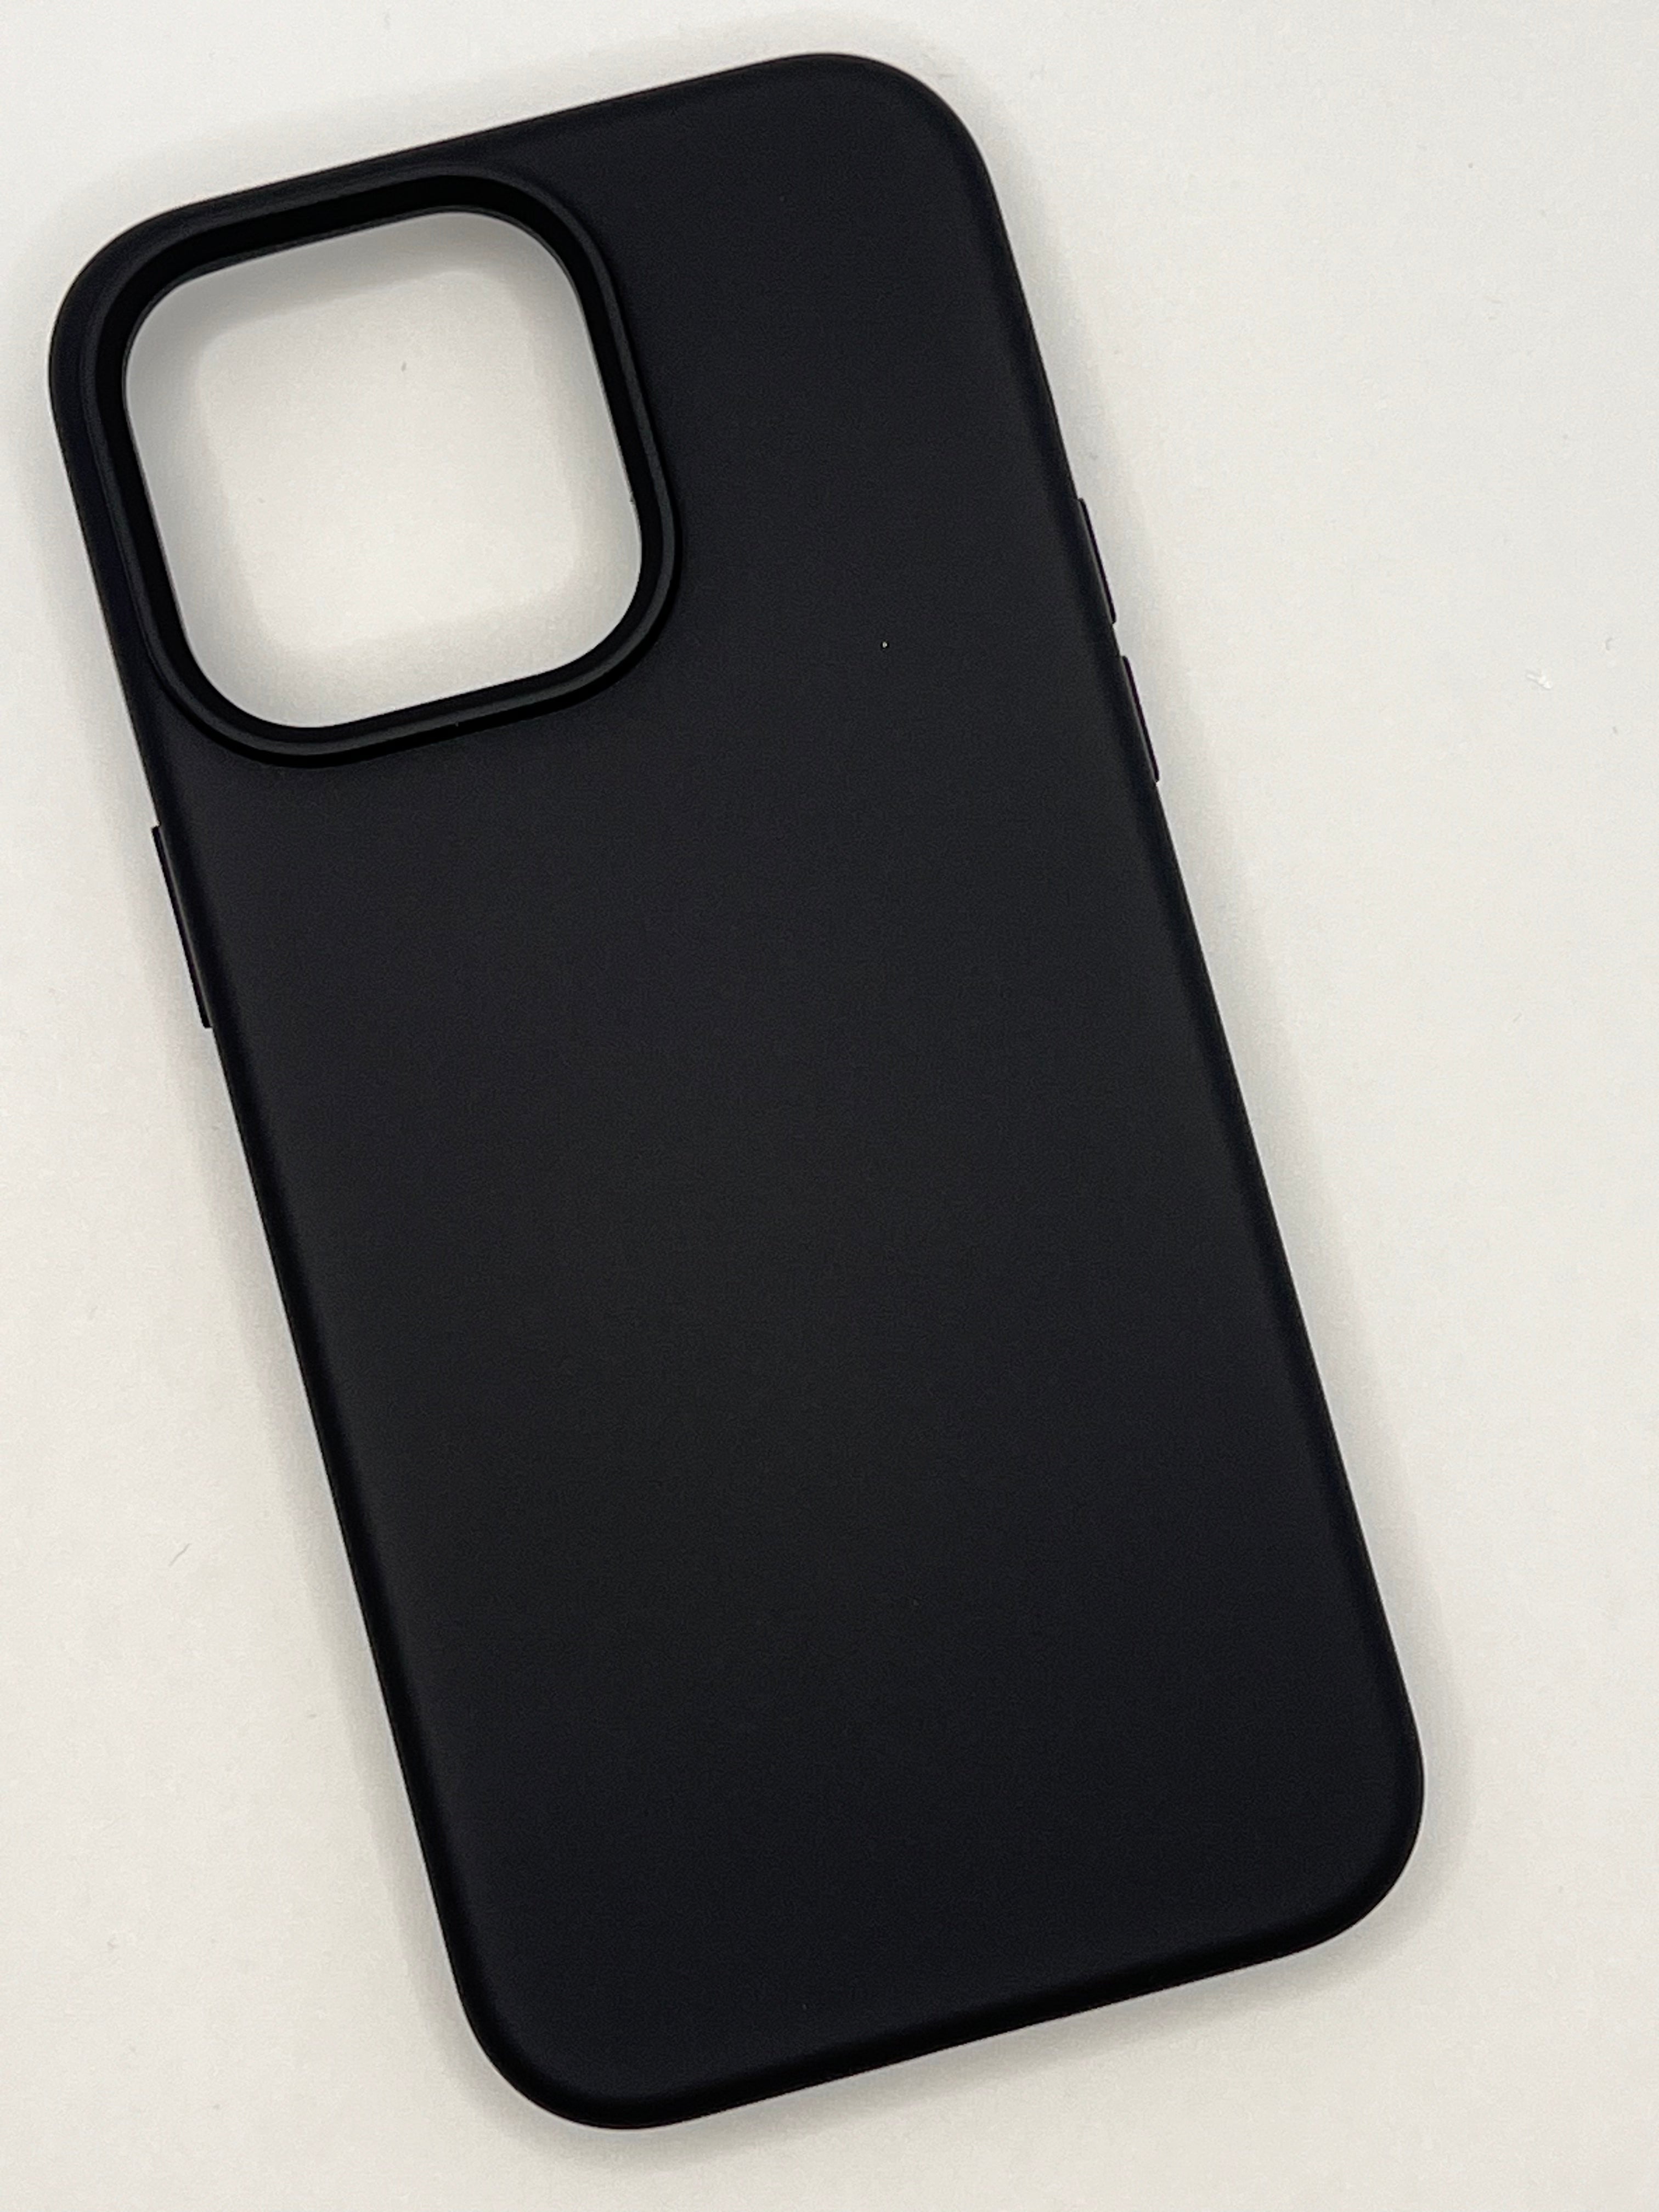 iPhone 13 mini apple hard back case